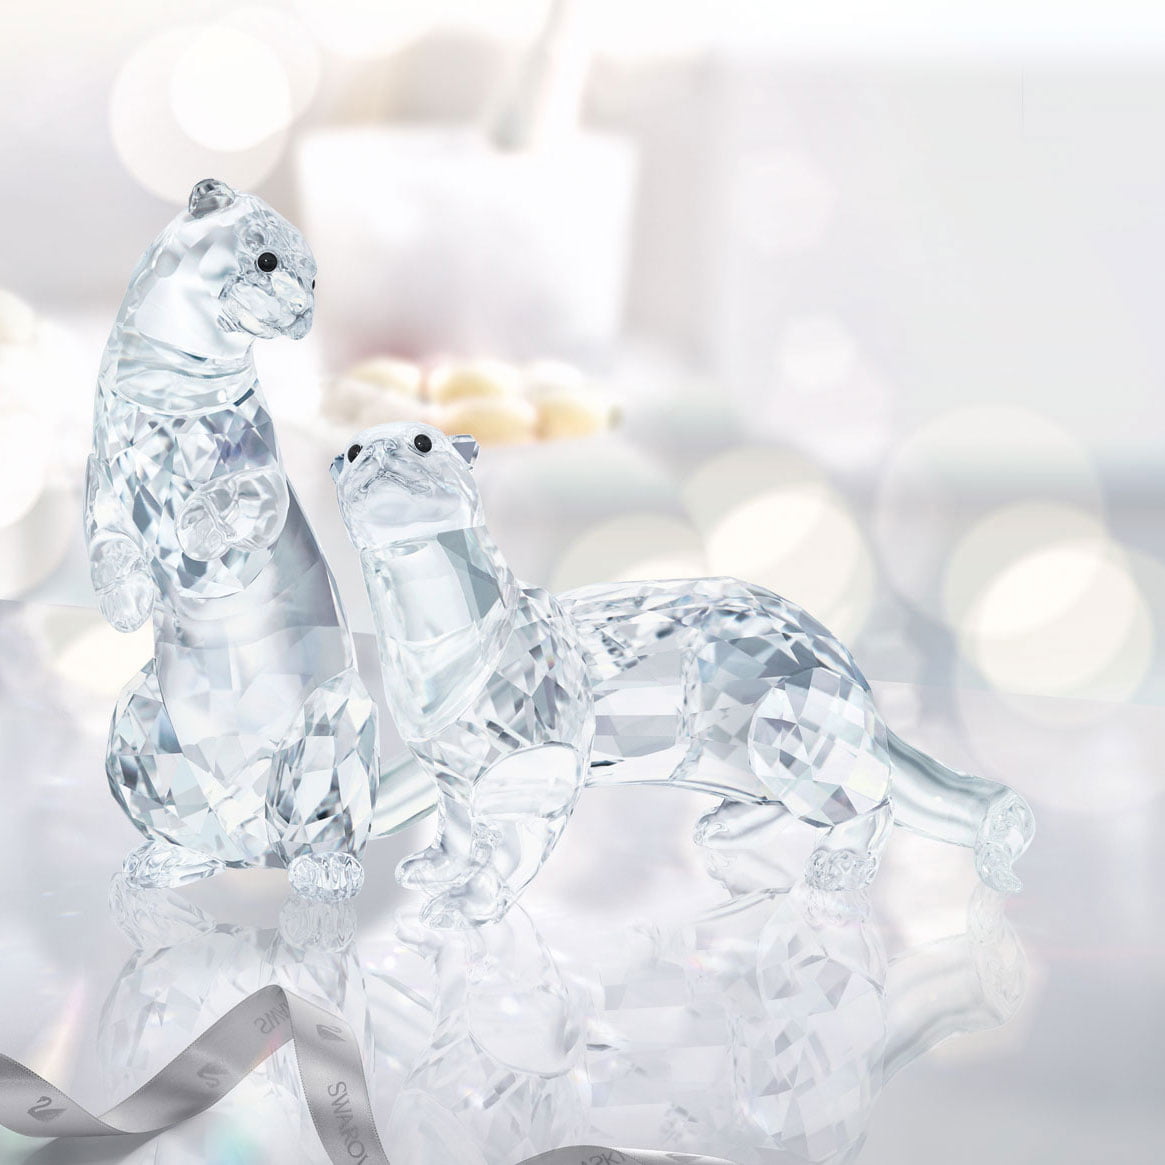 Habitat gemiddelde Het formulier Swarovski Crystal "Otters" Figurines New 2018 - Walmart.com